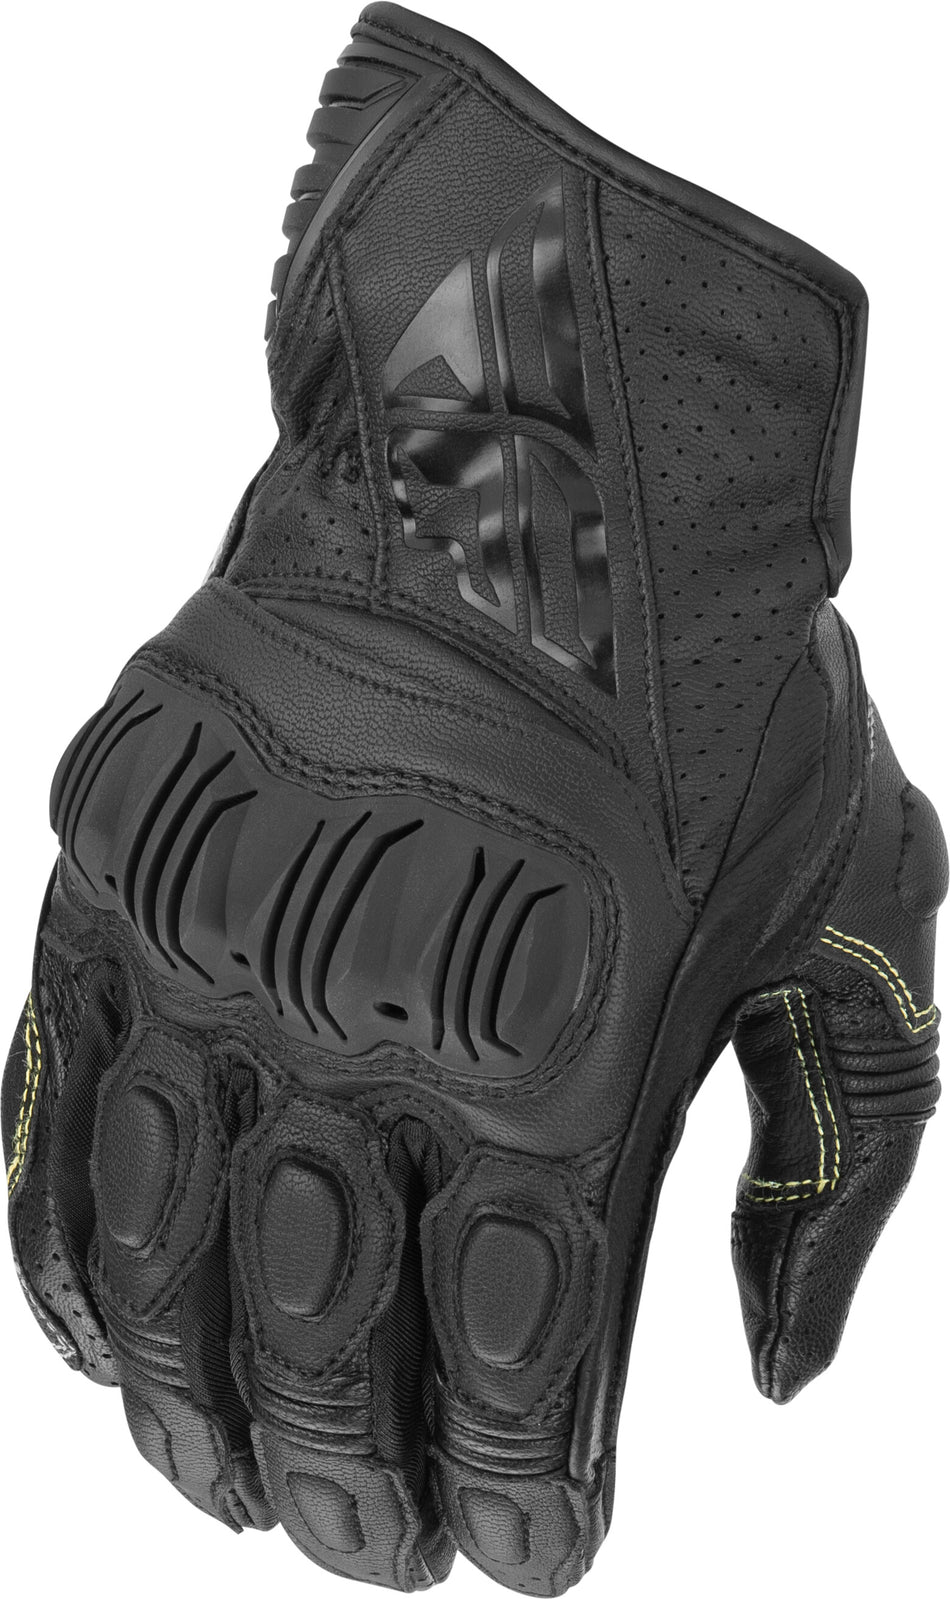 FLY RACING Brawler Gloves Black Sm 476-2090S